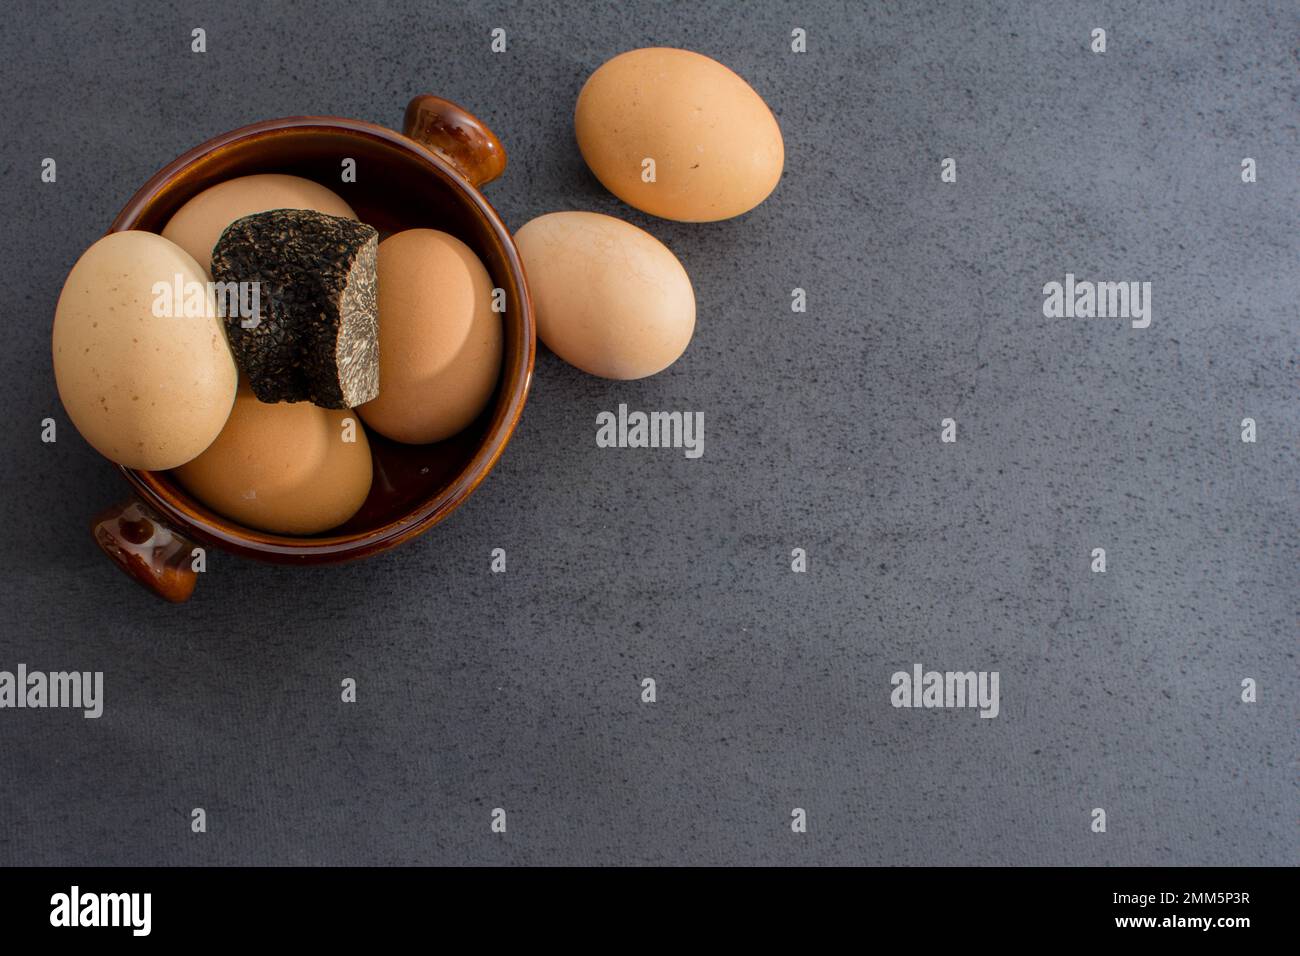 Truffled eggs with a tuber melanosporum winter truffle Stock Photo